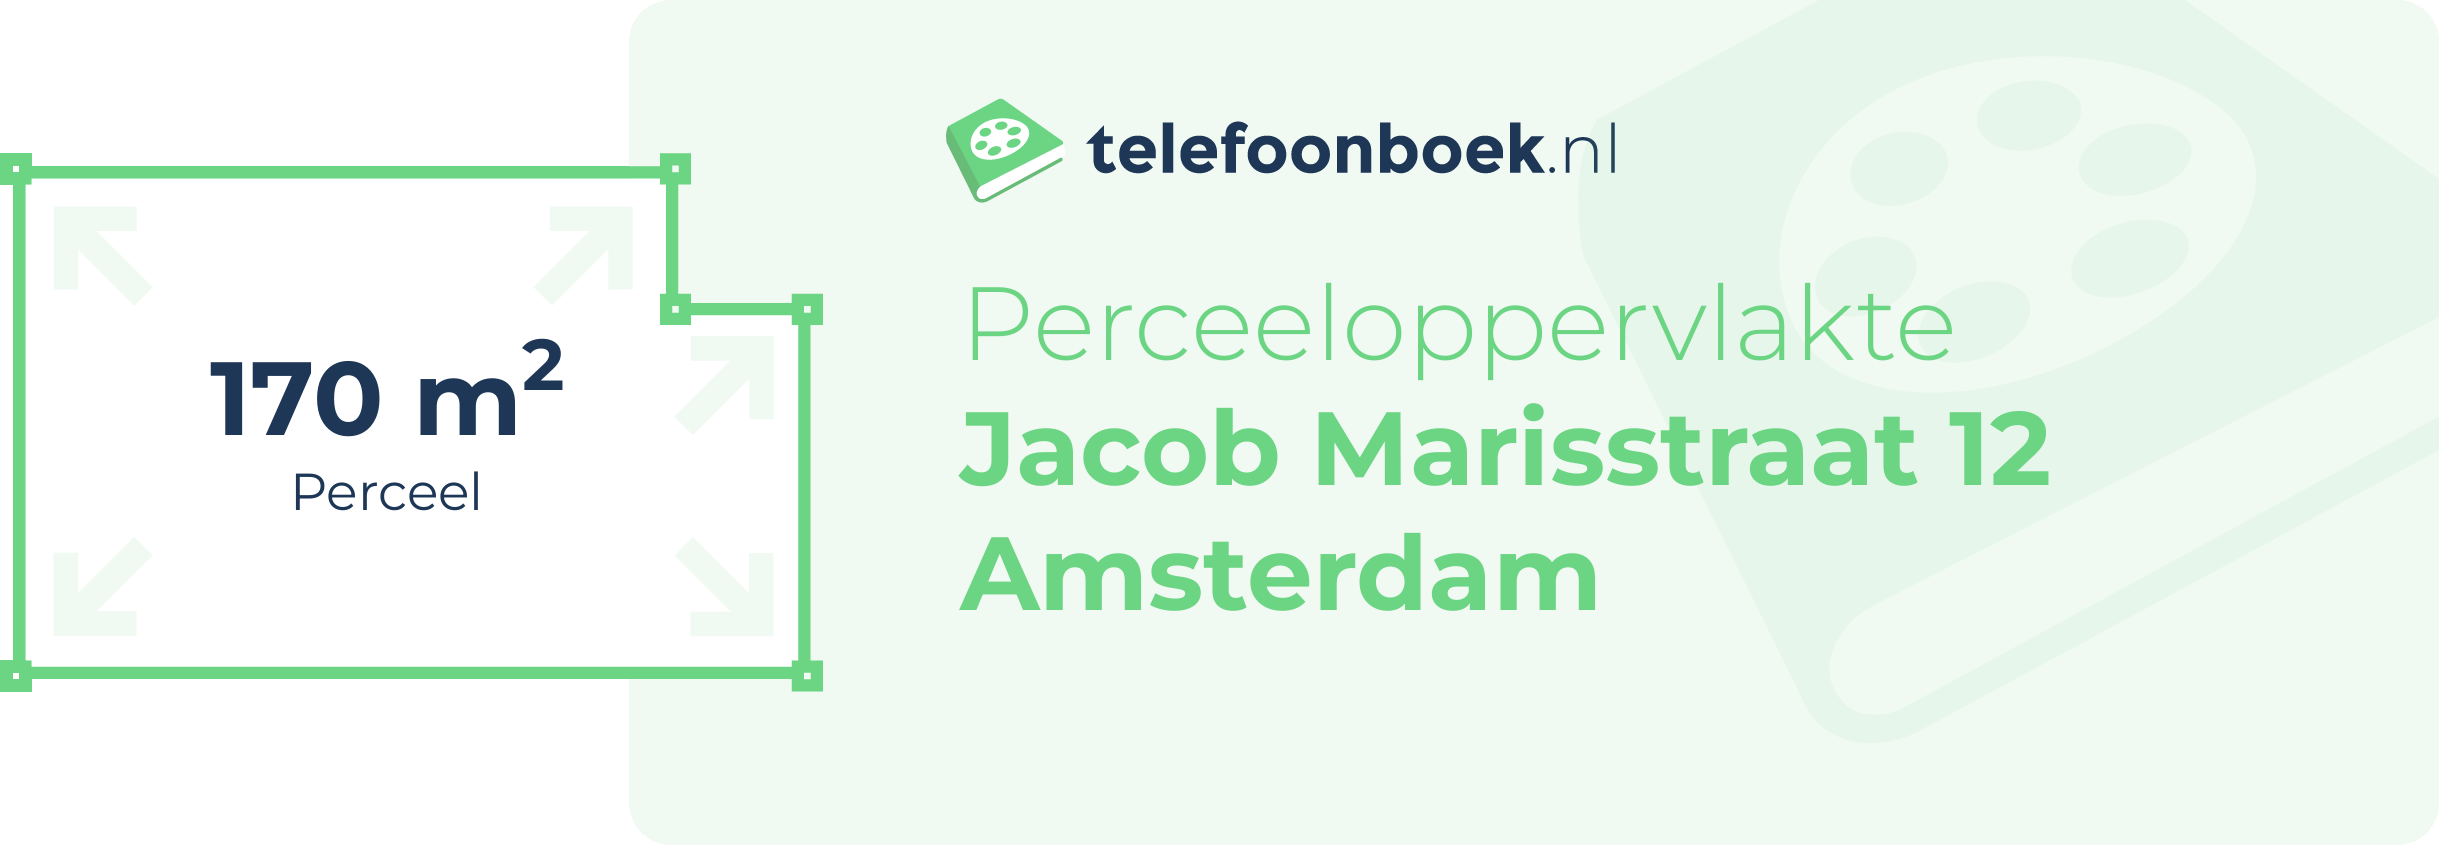 Perceeloppervlakte Jacob Marisstraat 12 Amsterdam